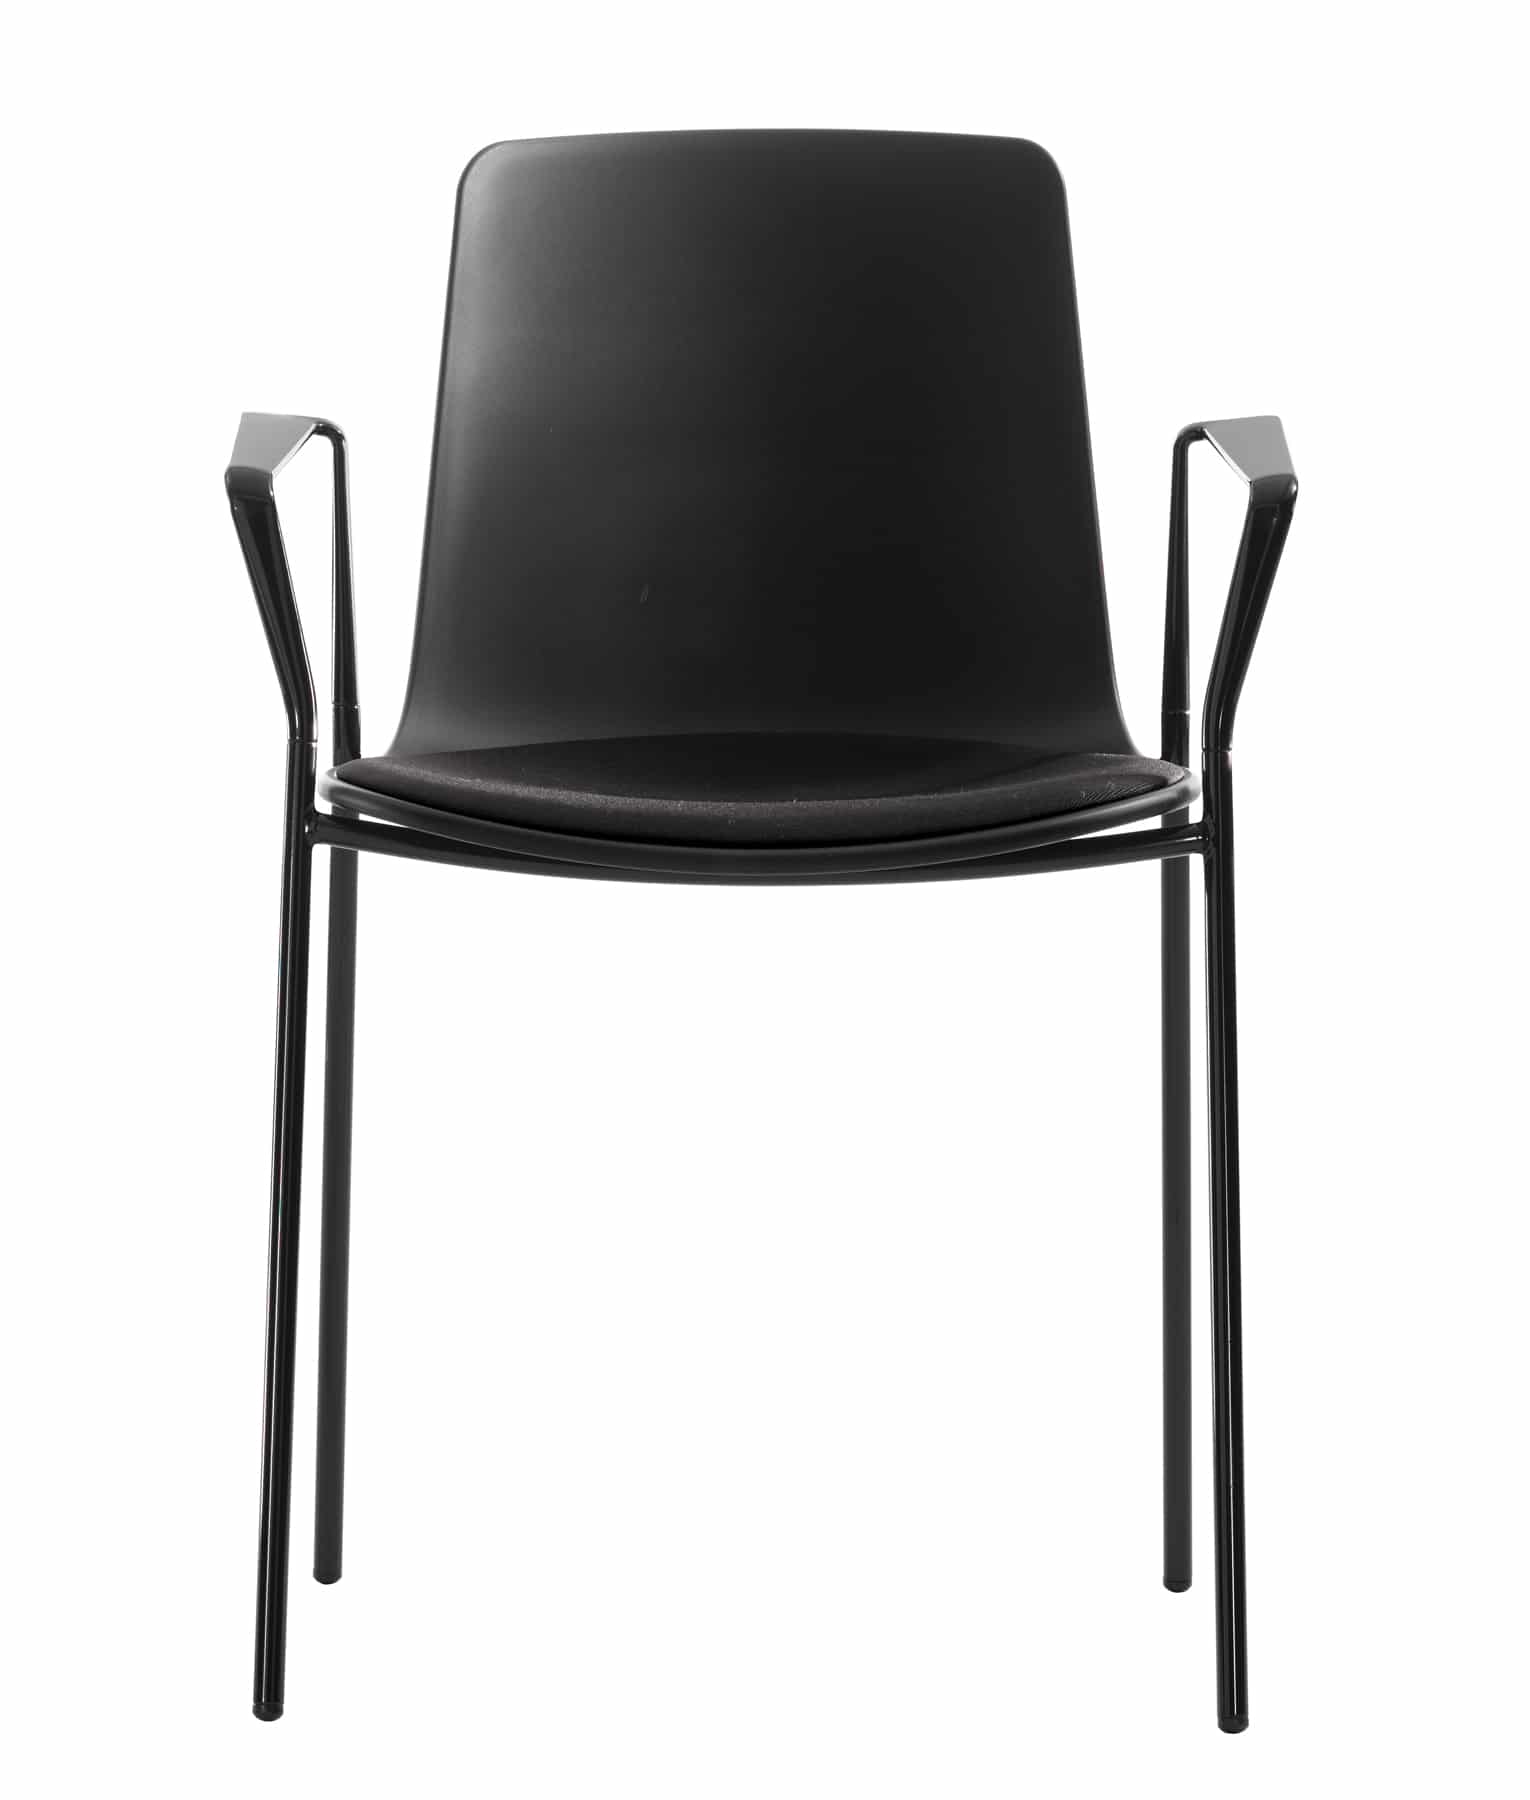 Lottus chair